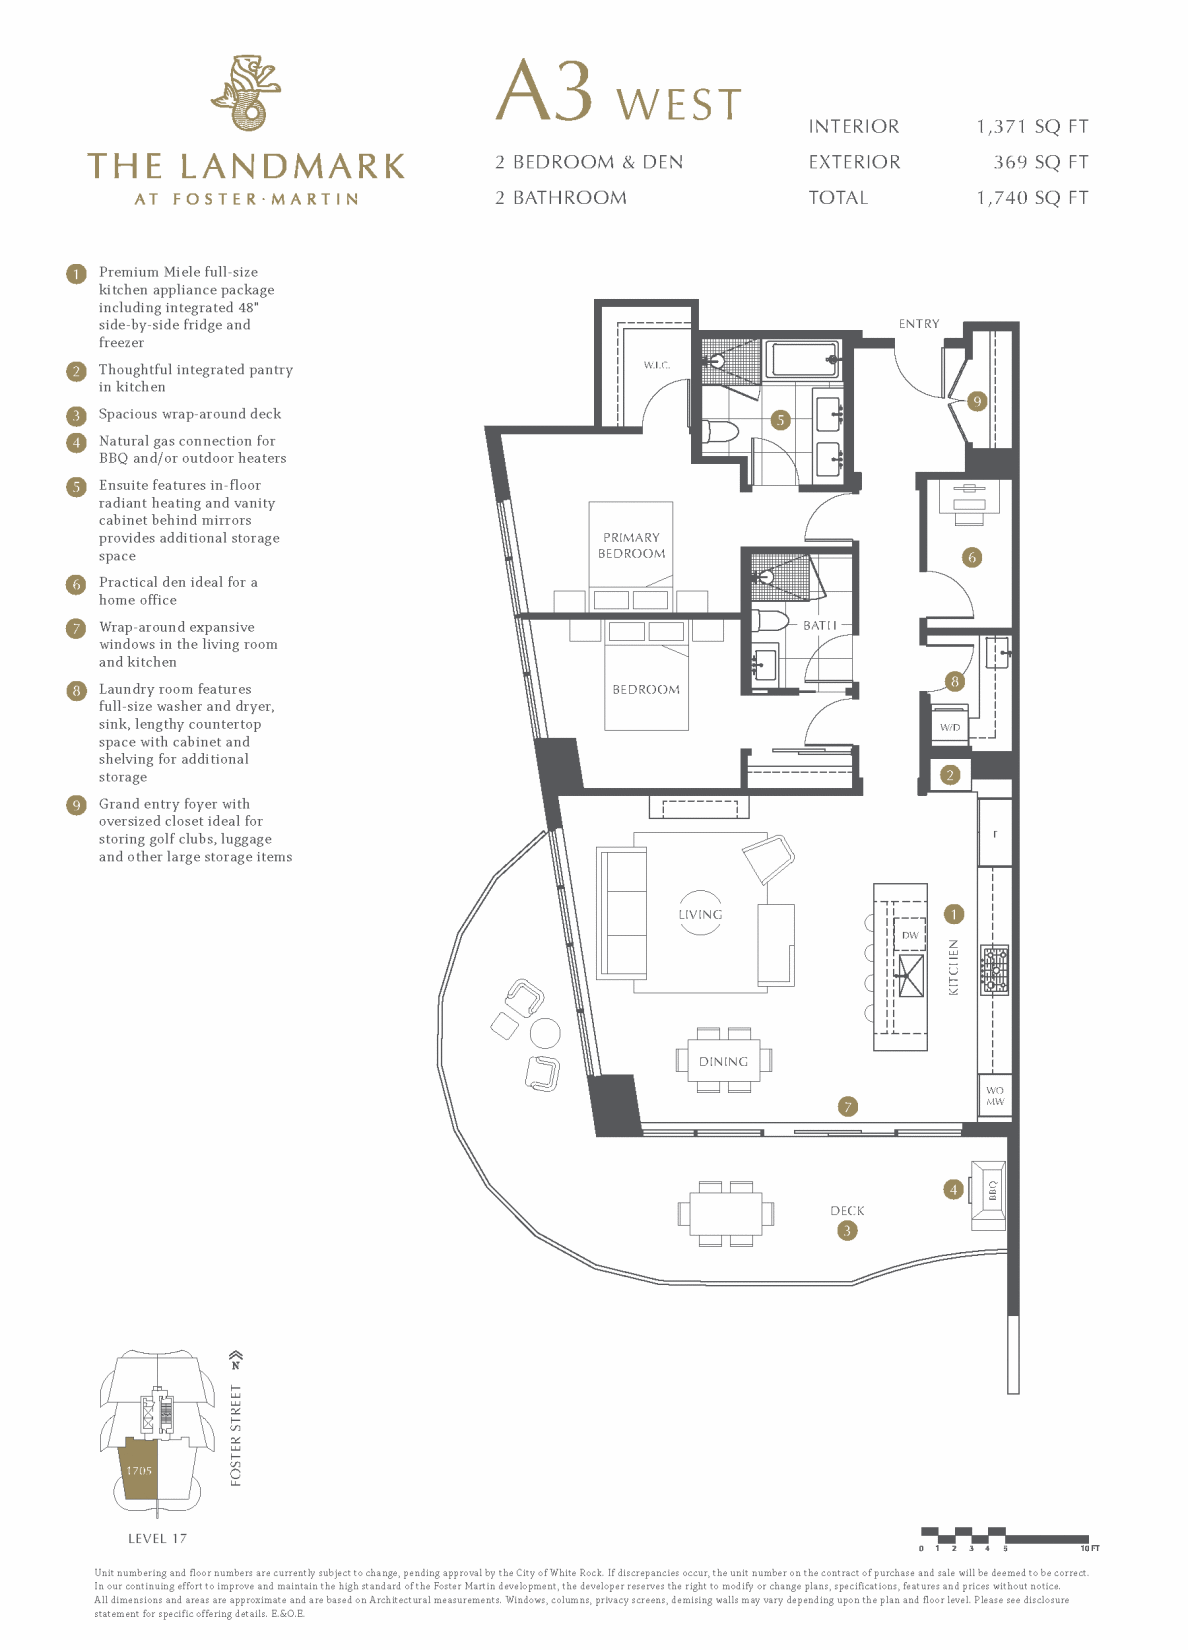 The Landmark Floor Plan A3 W